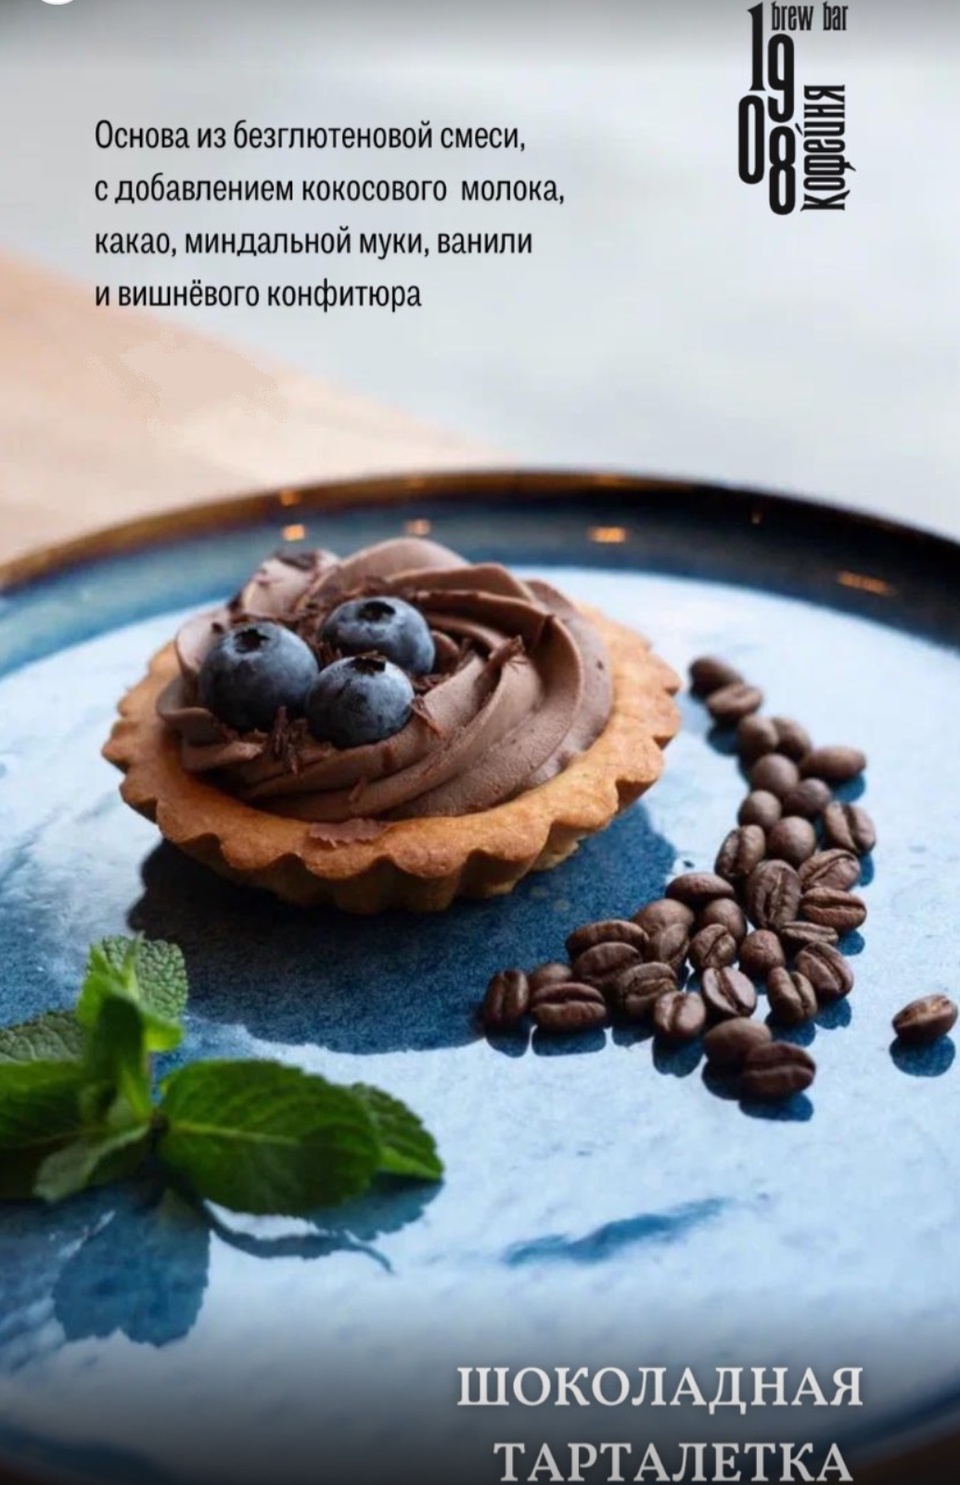 Шоколадная тарталетка - 250 ₽, заказать онлайн.